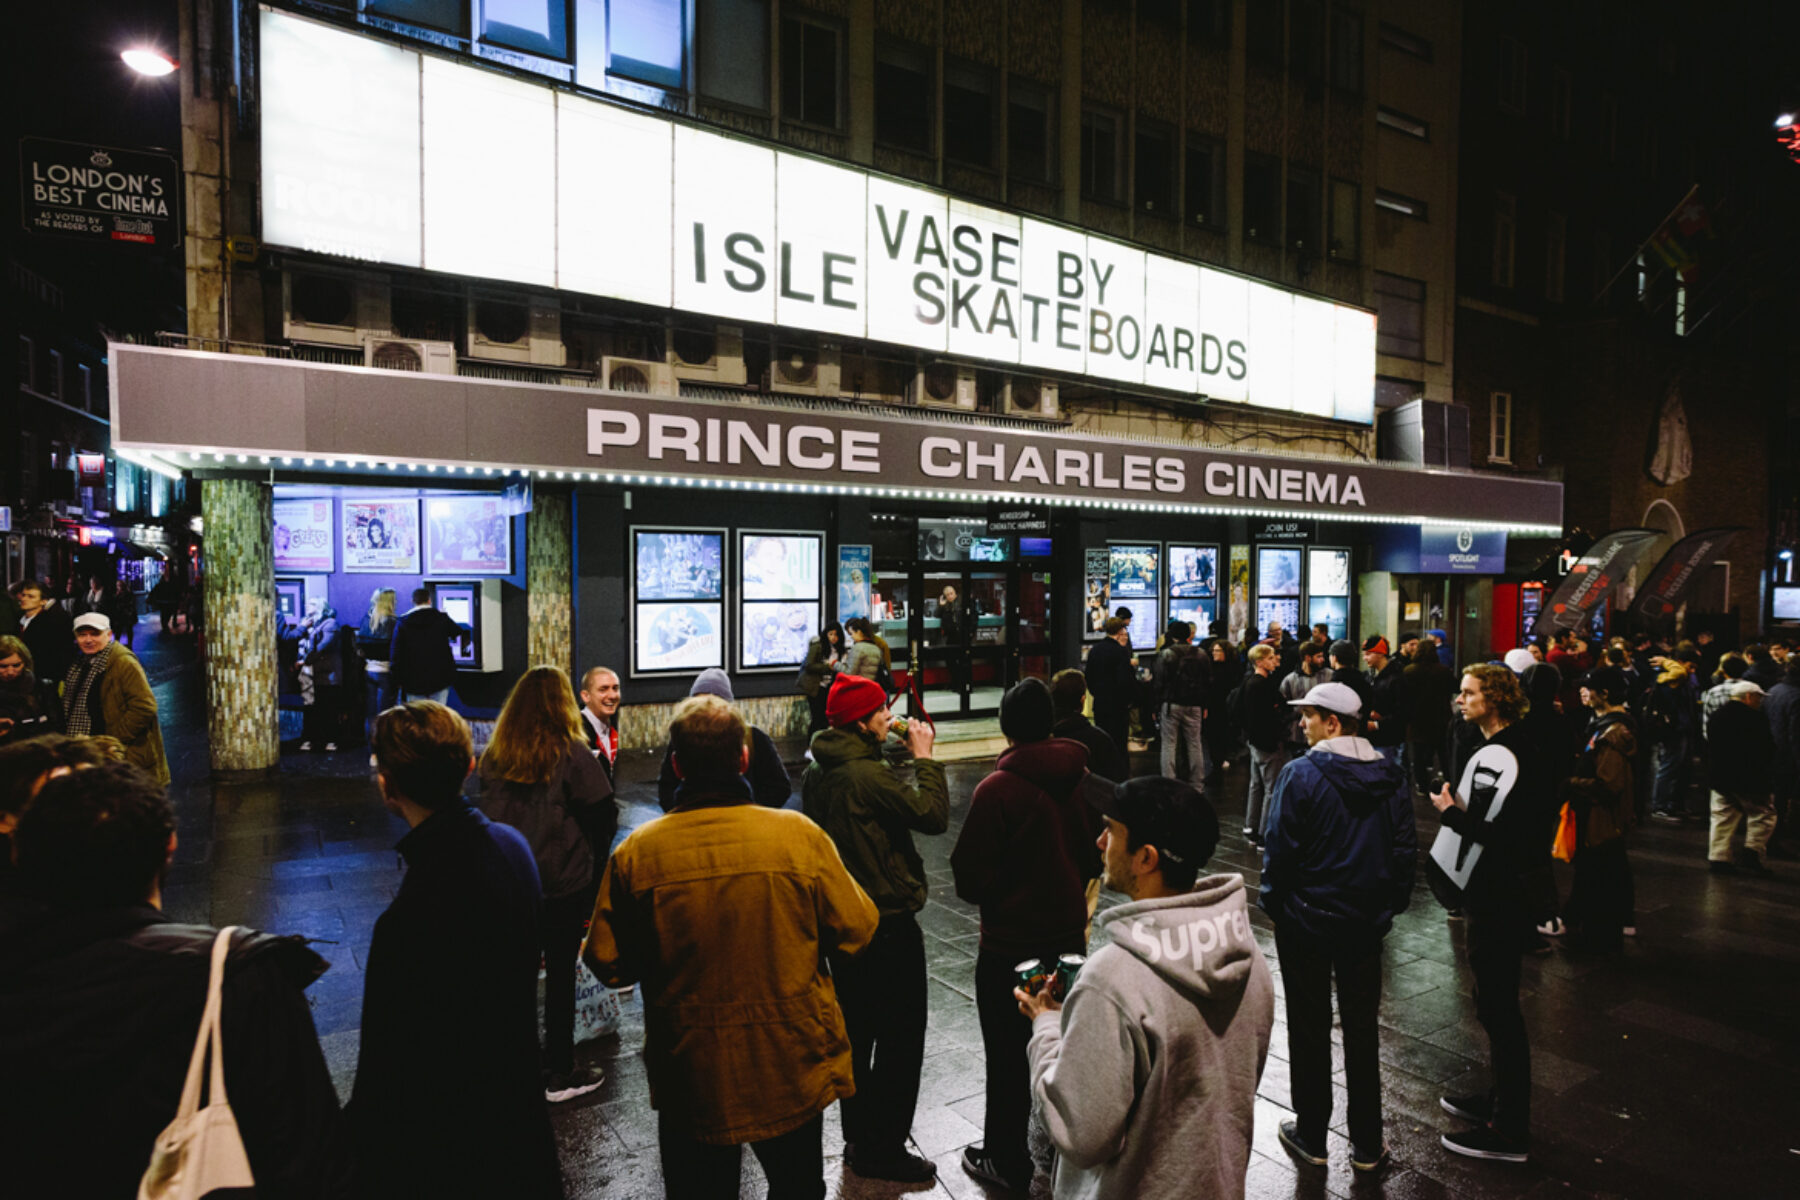 _IHC8074e-Isle-Vase-Film-Premiere-Prince-Charles-Cinema-London-November-2015-Photographer-Maksim-Kalanep